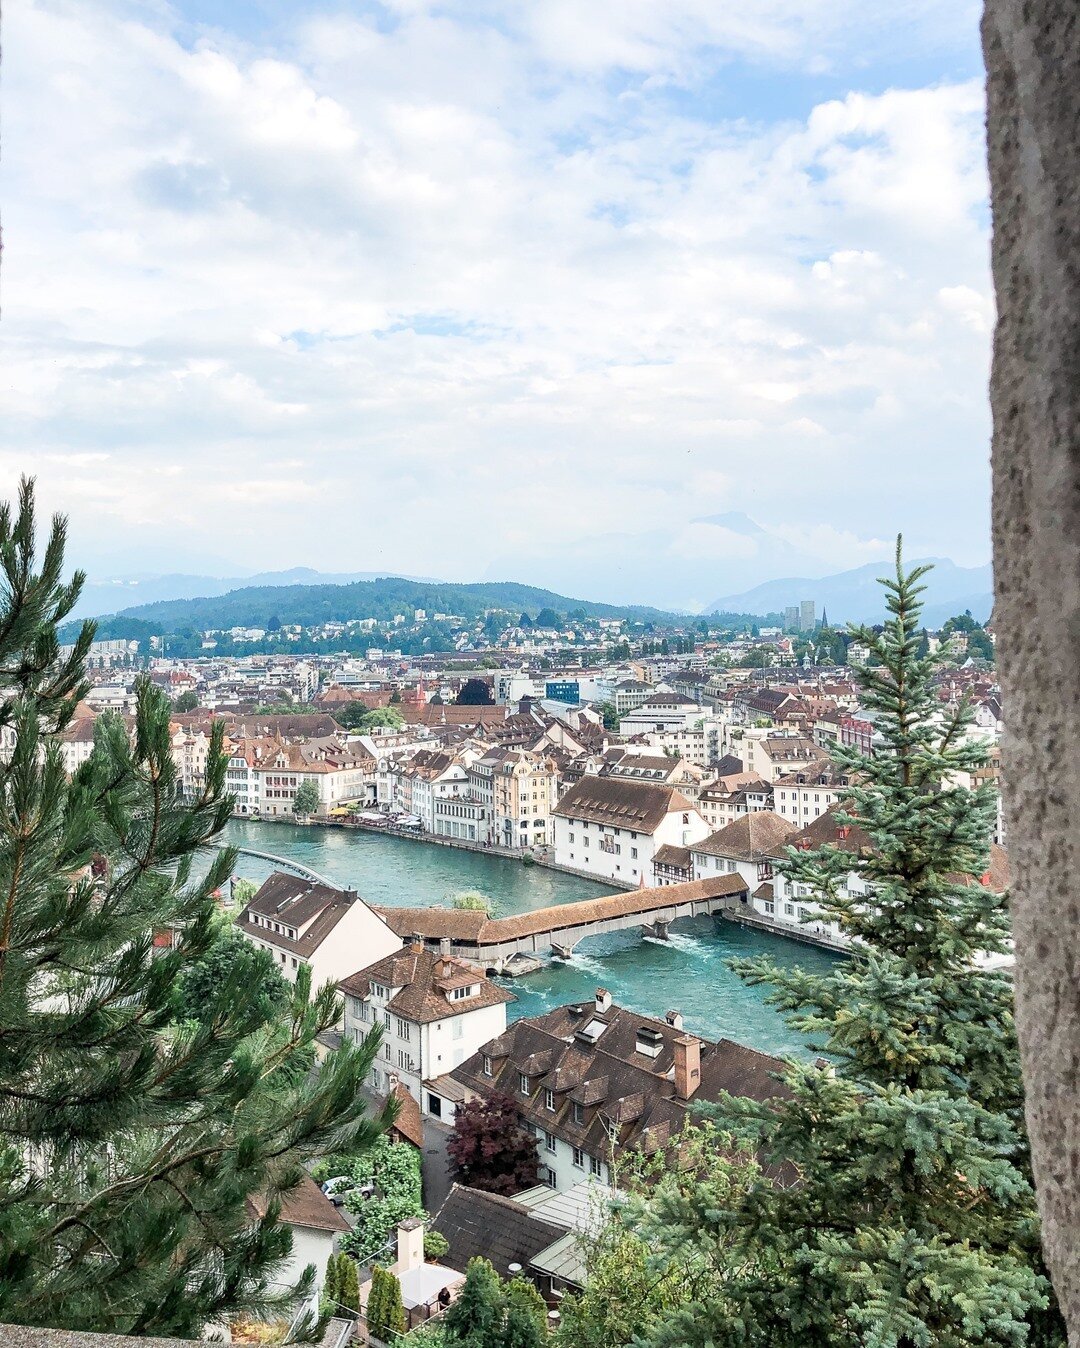 📍 Lucerne, Switzerland⠀⠀⠀⠀⠀⠀⠀⠀⠀
⠀⠀⠀⠀⠀⠀⠀⠀⠀
photo @b.epublishing⠀⠀⠀⠀⠀⠀⠀⠀⠀
.⠀⠀⠀⠀⠀⠀⠀⠀⠀
.⠀⠀⠀⠀⠀⠀⠀⠀⠀
.⠀⠀⠀⠀⠀⠀⠀⠀⠀
#wheretofindme #beaway #BeautifulDestinations #HelloFrom #travelpics #suitcasetravels #wonderfulworld #instapassport #livemoremagic #theartofslo